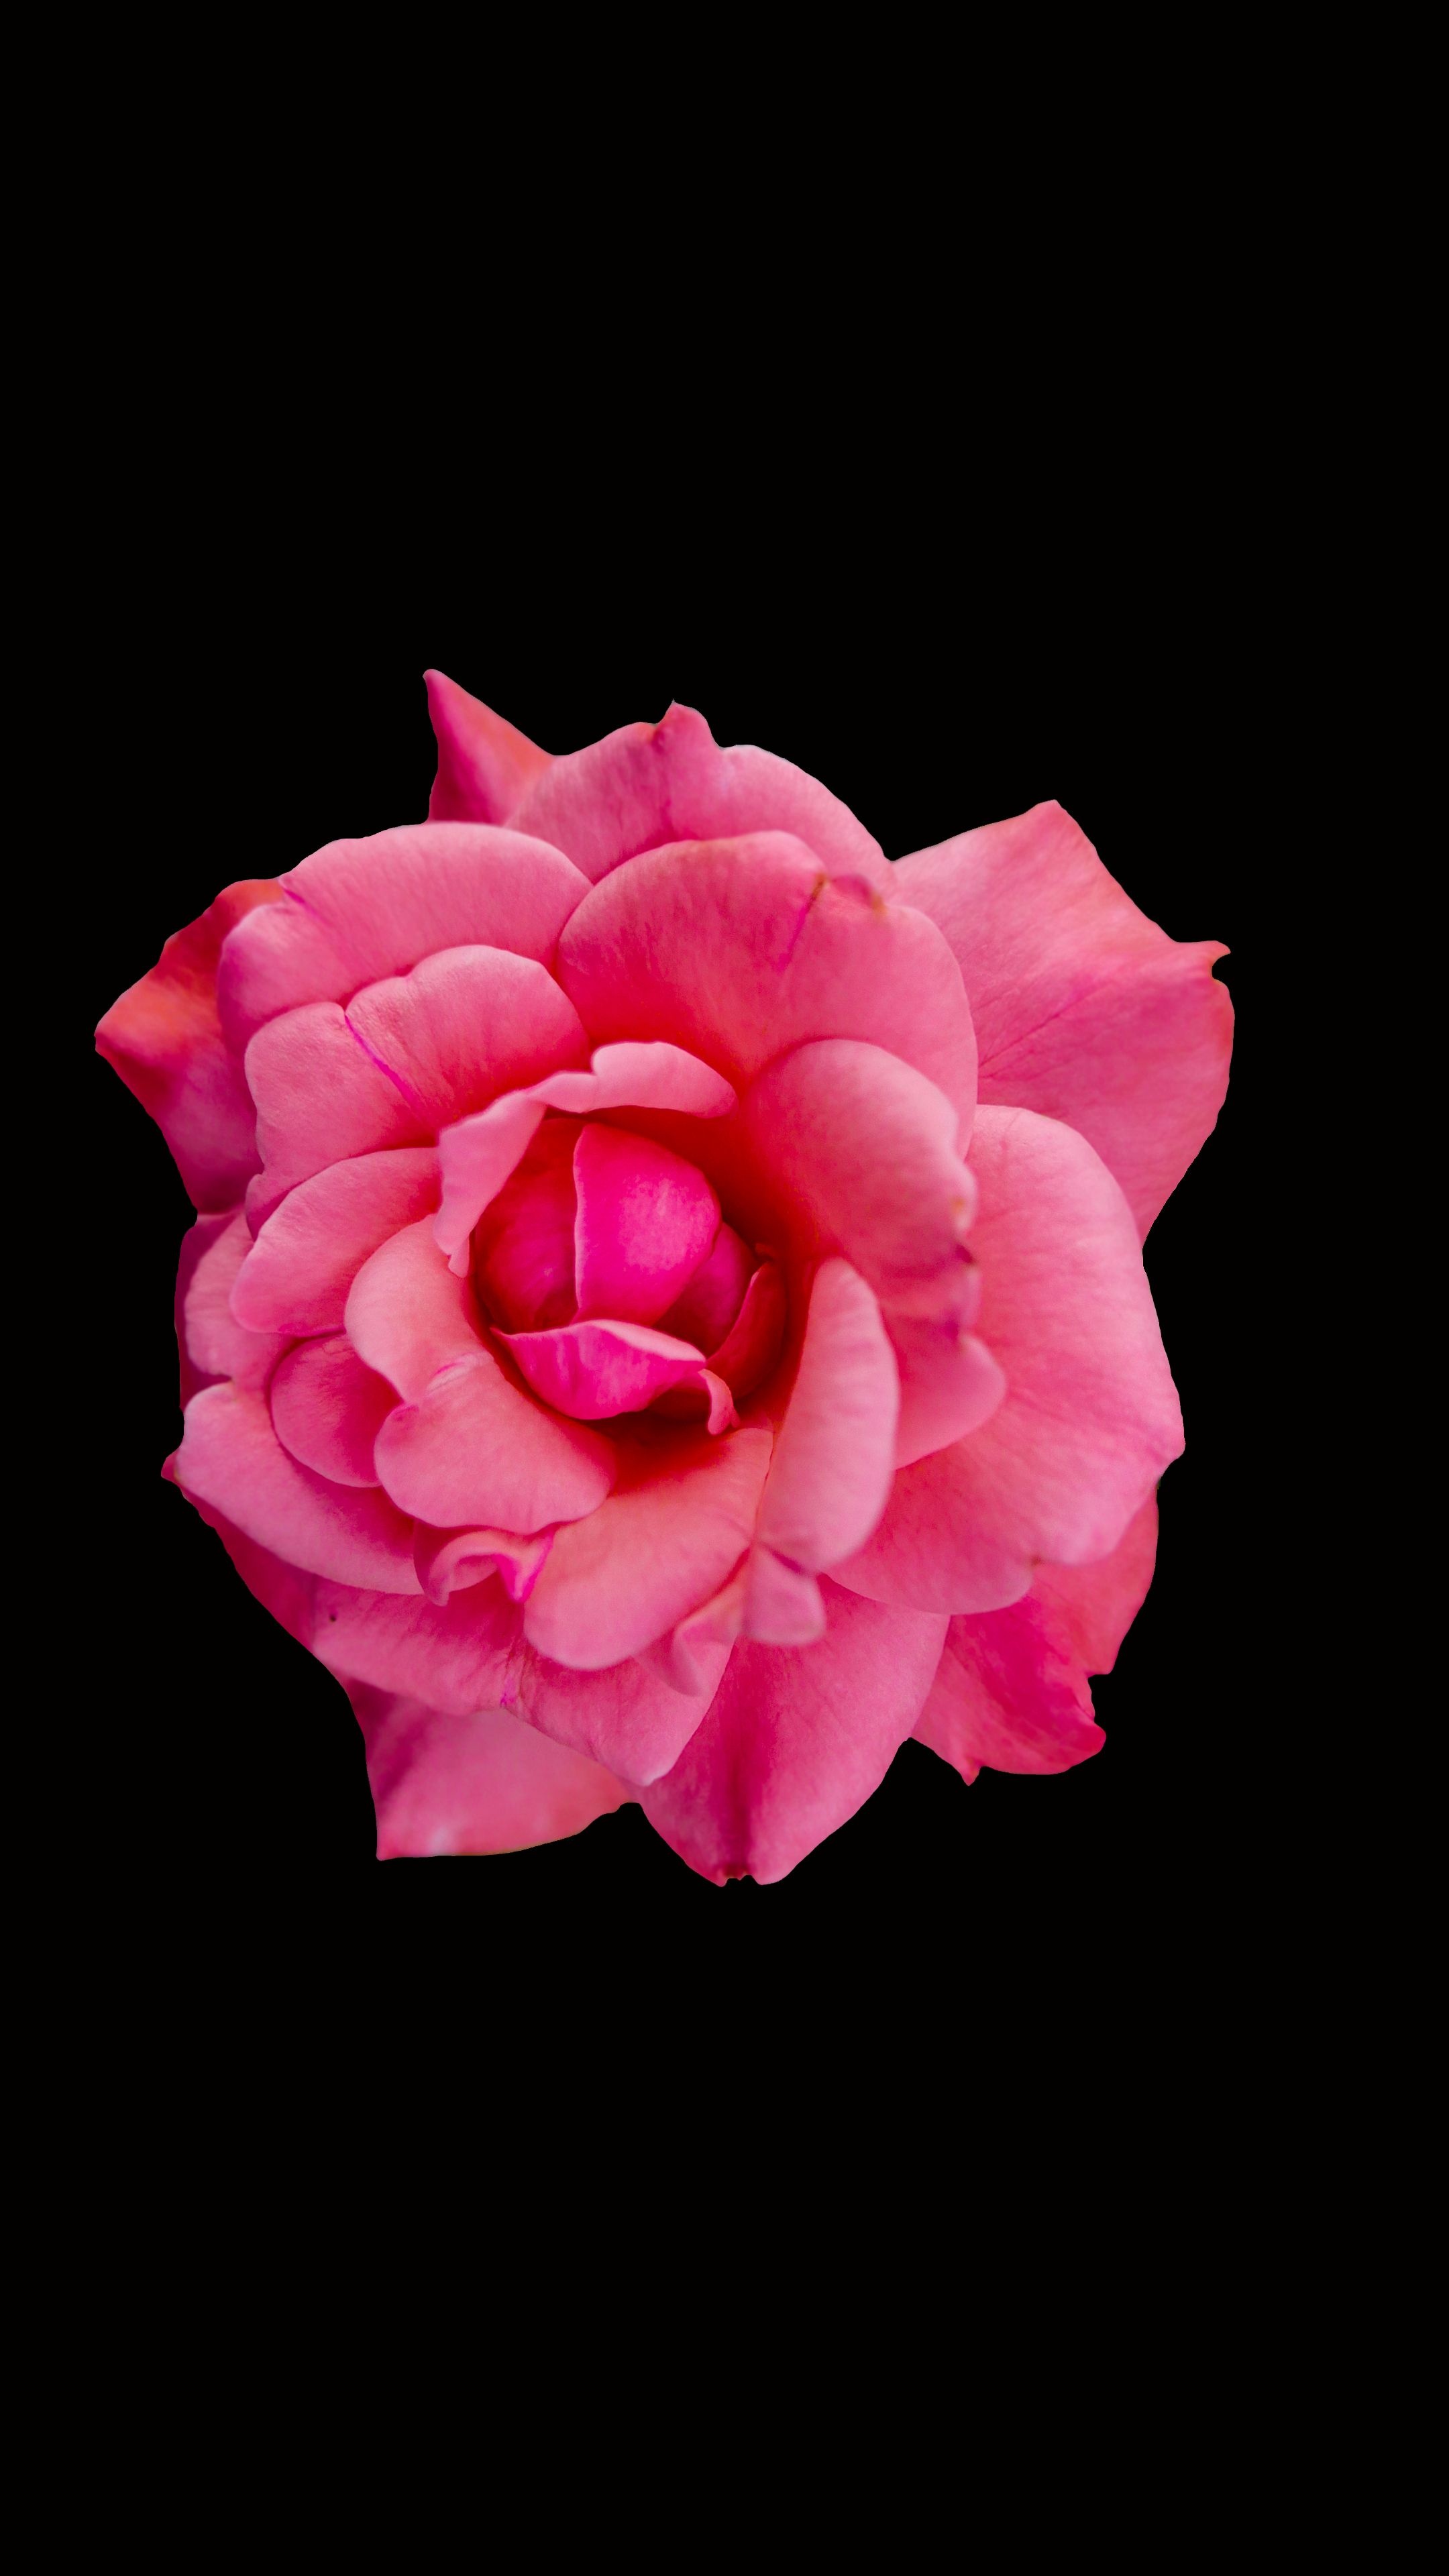 Rose flower wallpaper, 4K background, Floral inspiration, Petal beauty, 2160x3840 4K Phone